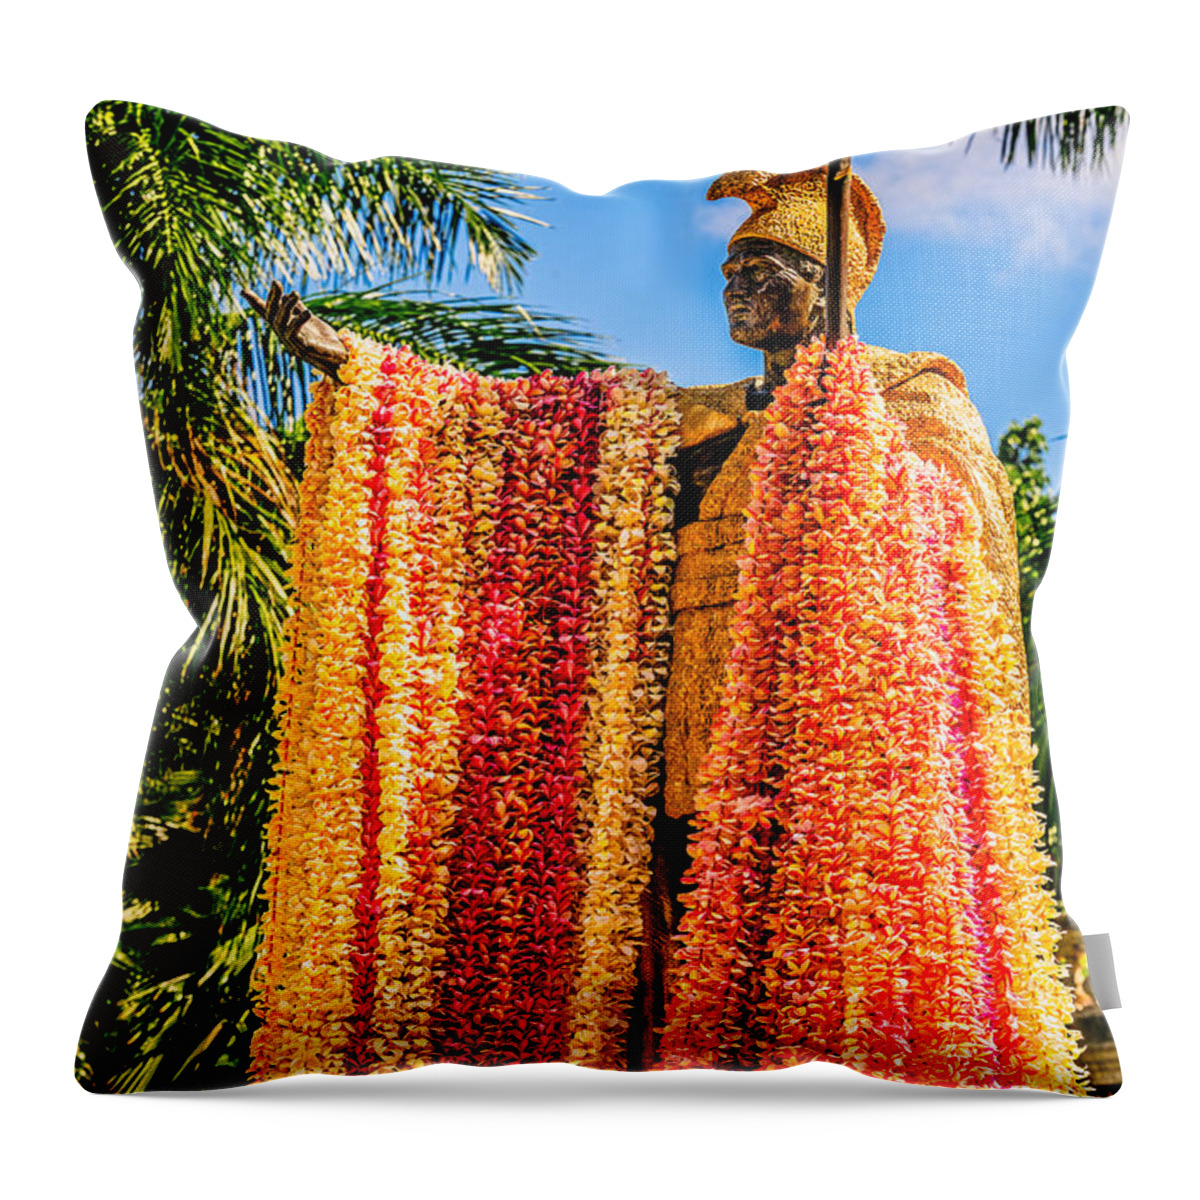 King Kamehameha Throw Pillow featuring the photograph King Kamehameha Statue Leis Portrait by Aloha Art